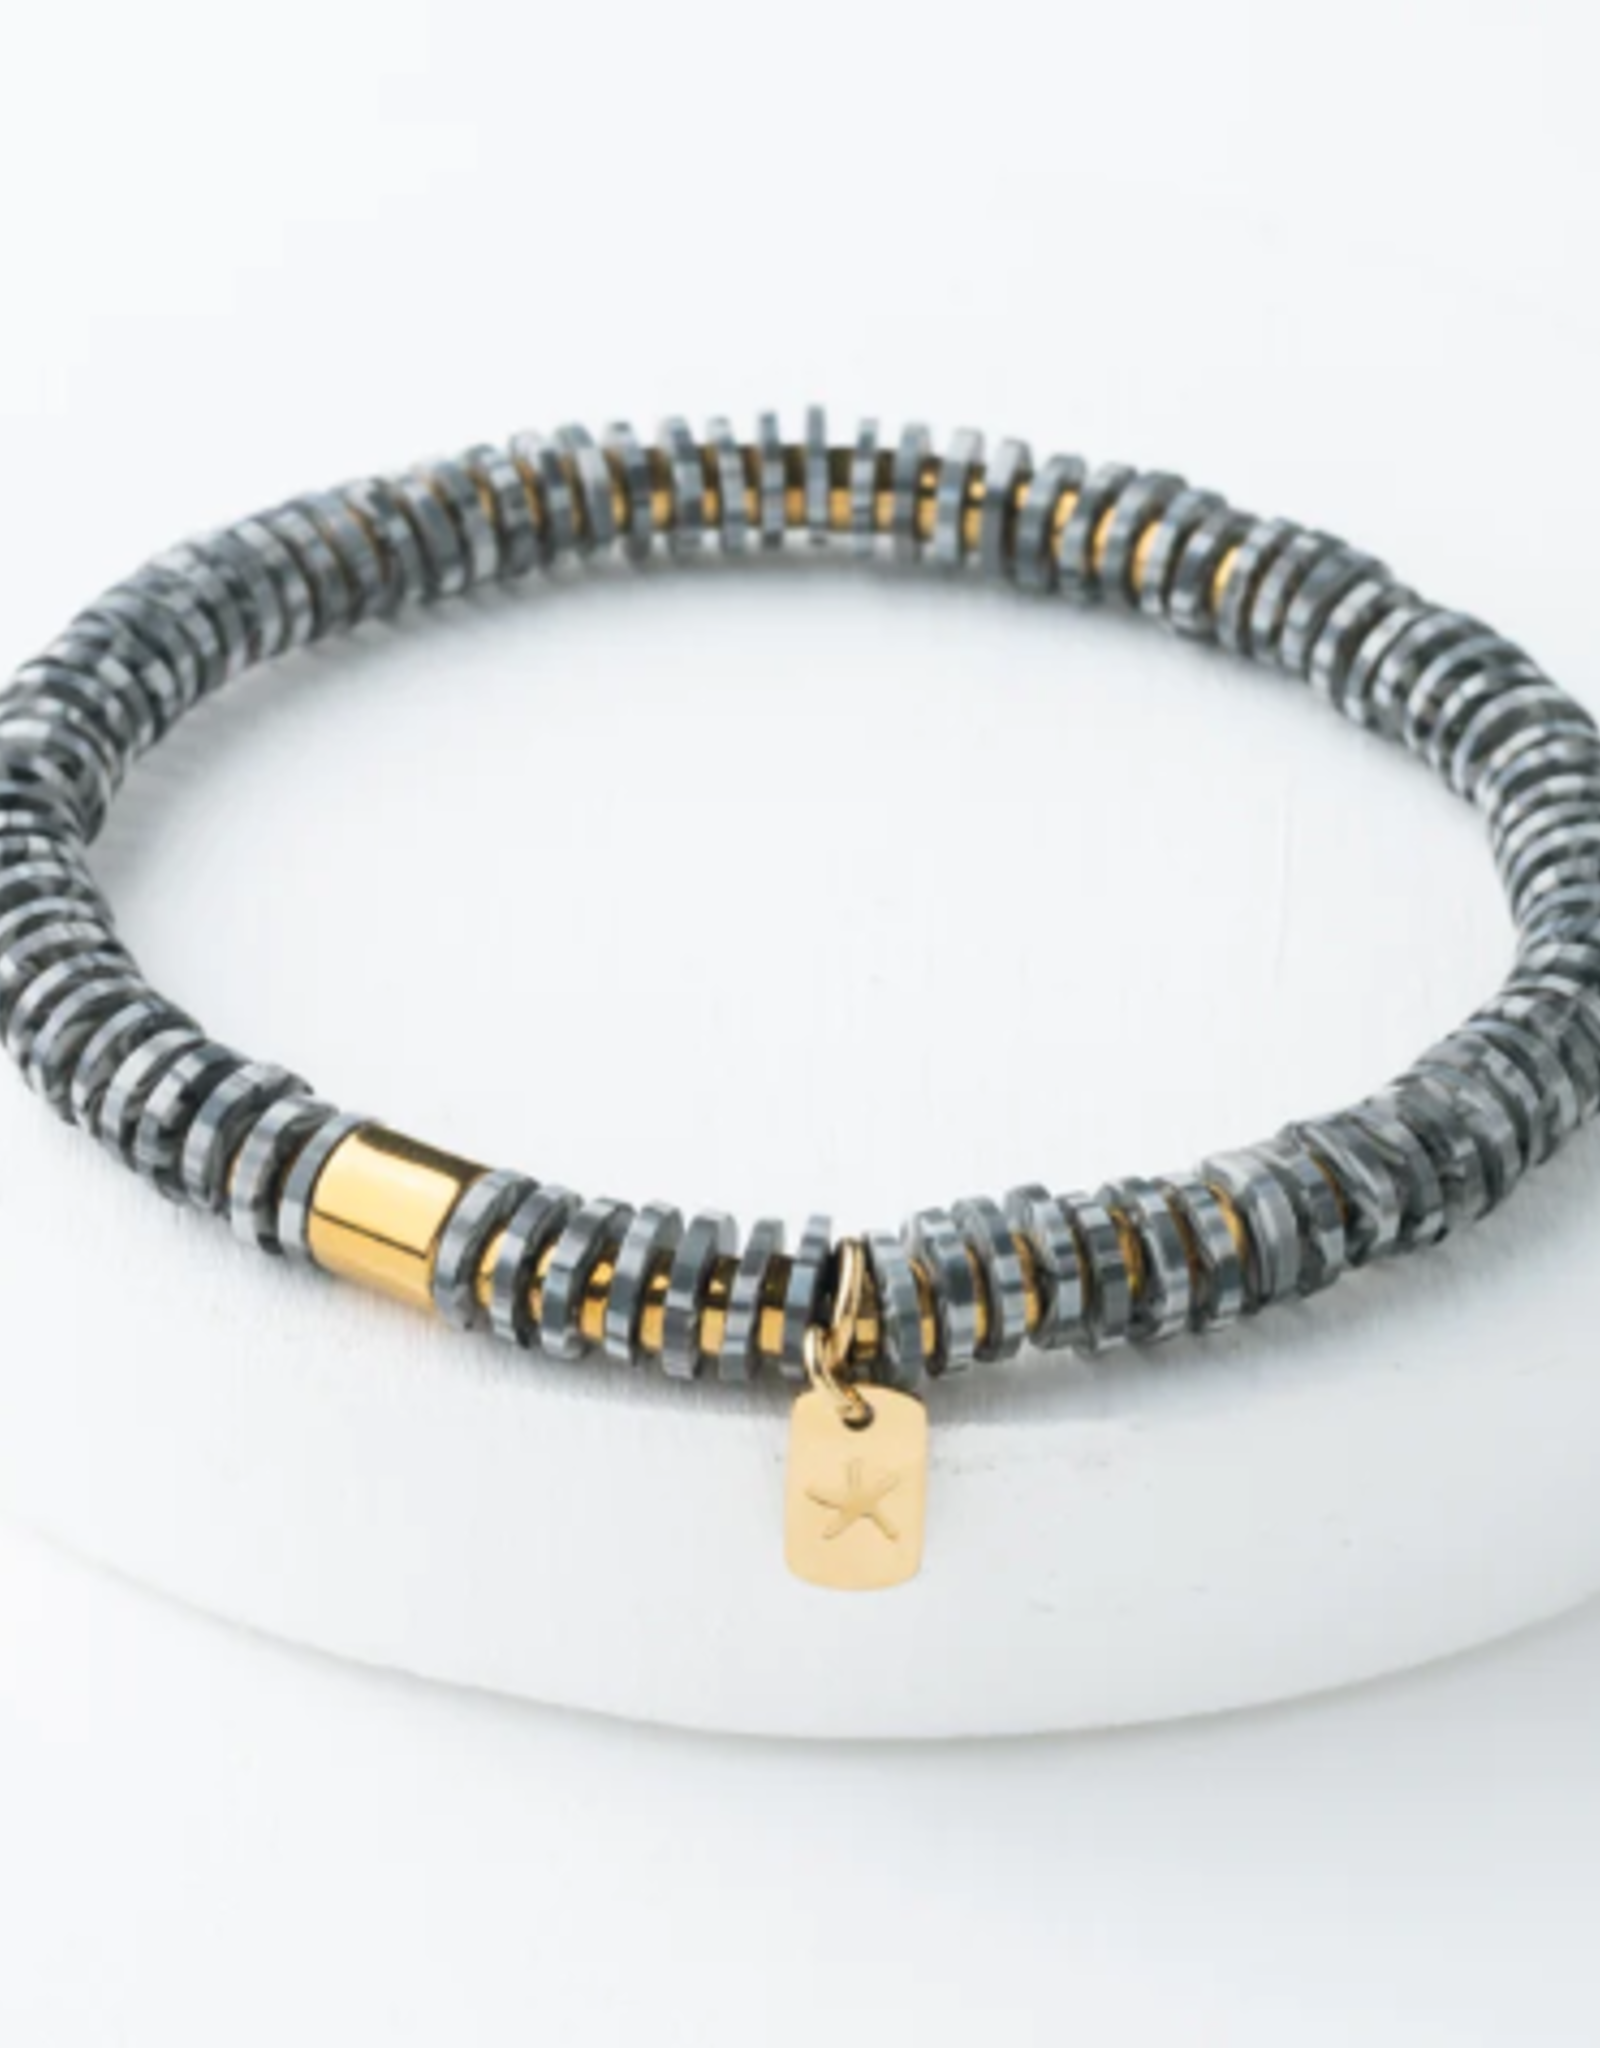 Starfish Project Inspired Black & White Bracelet